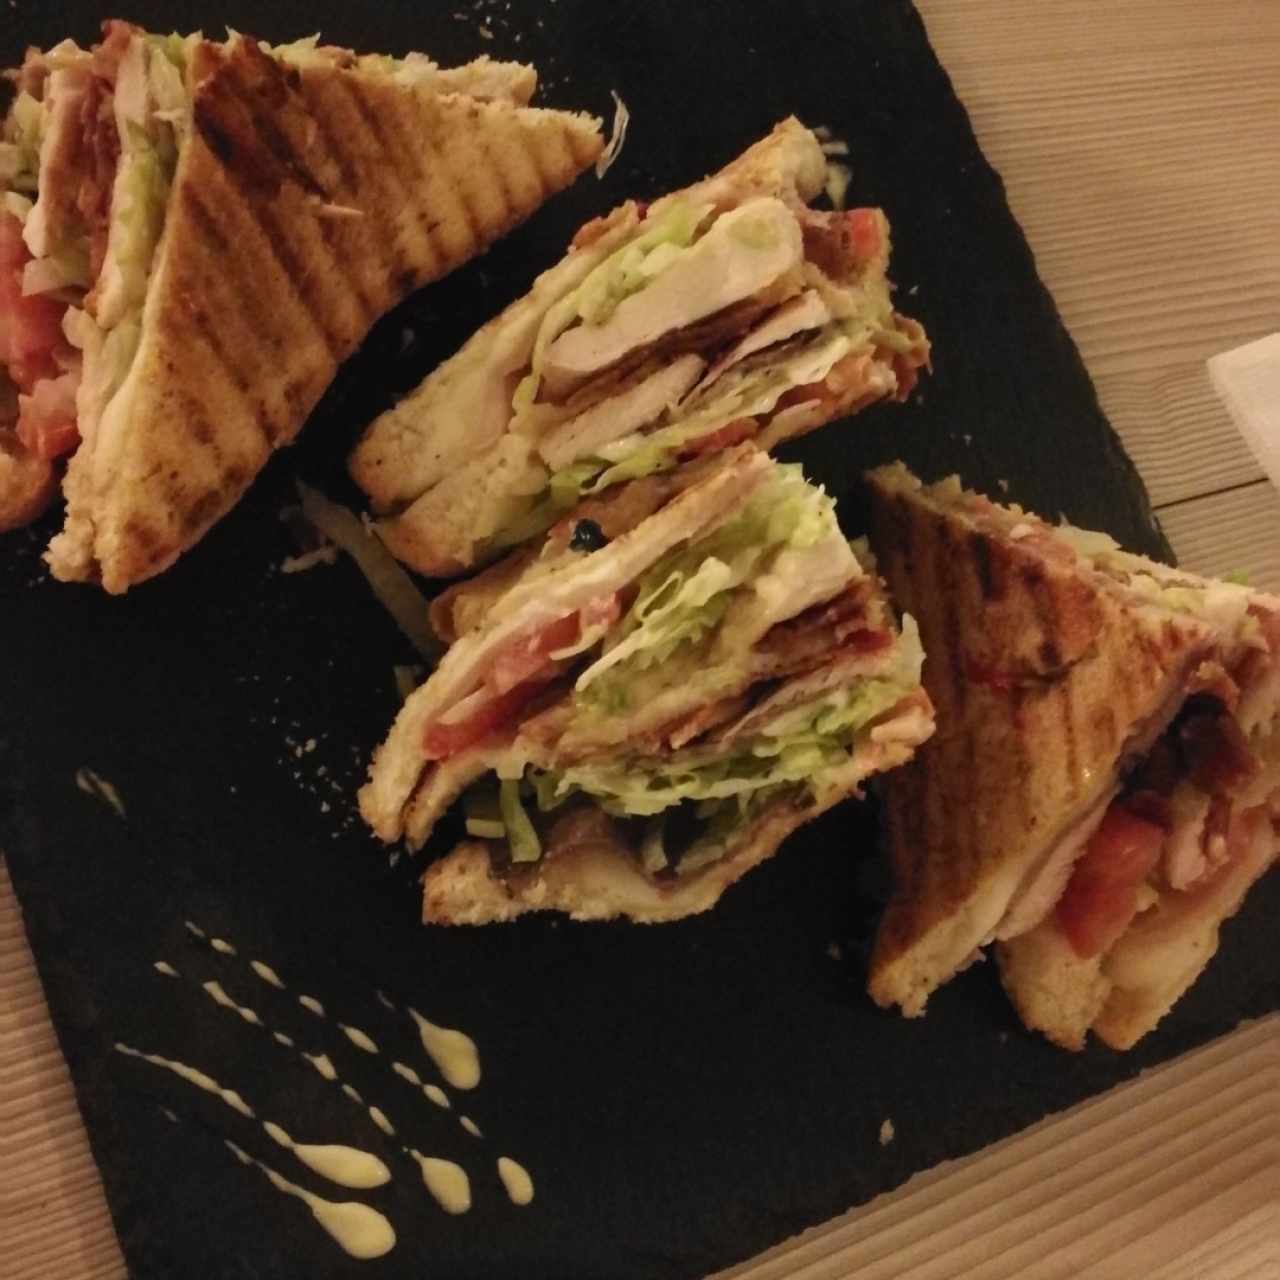 Sandwiches - Club sandwich